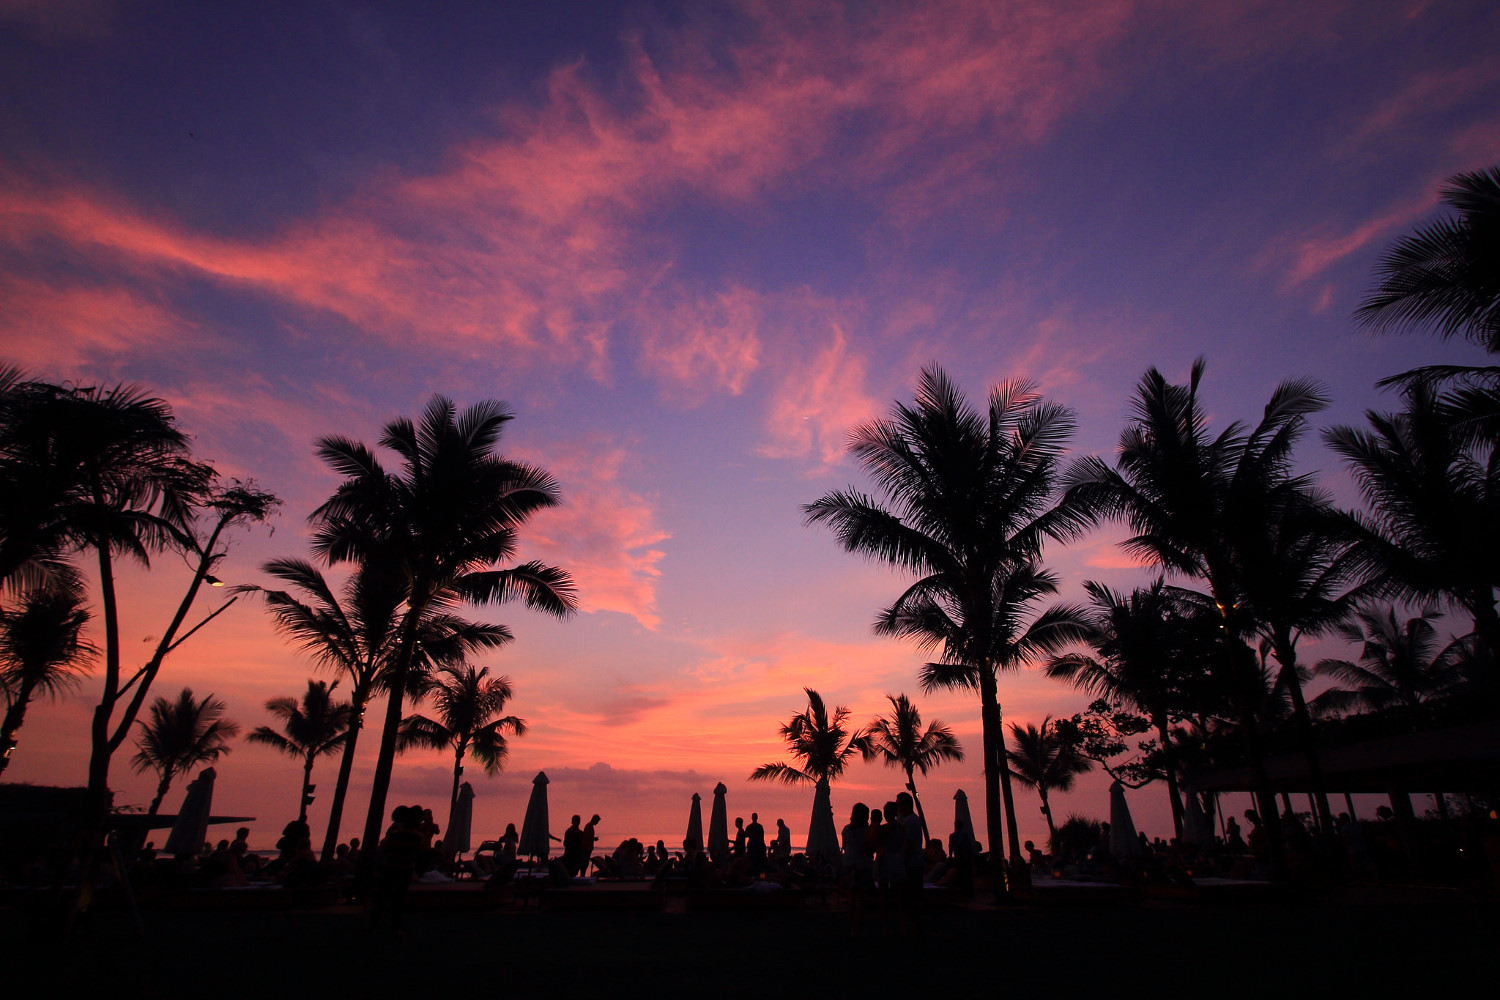 Sunset at Potato Head Beach Club, Seminyak, Bali. Image by skyseeker / CC BY 2.0